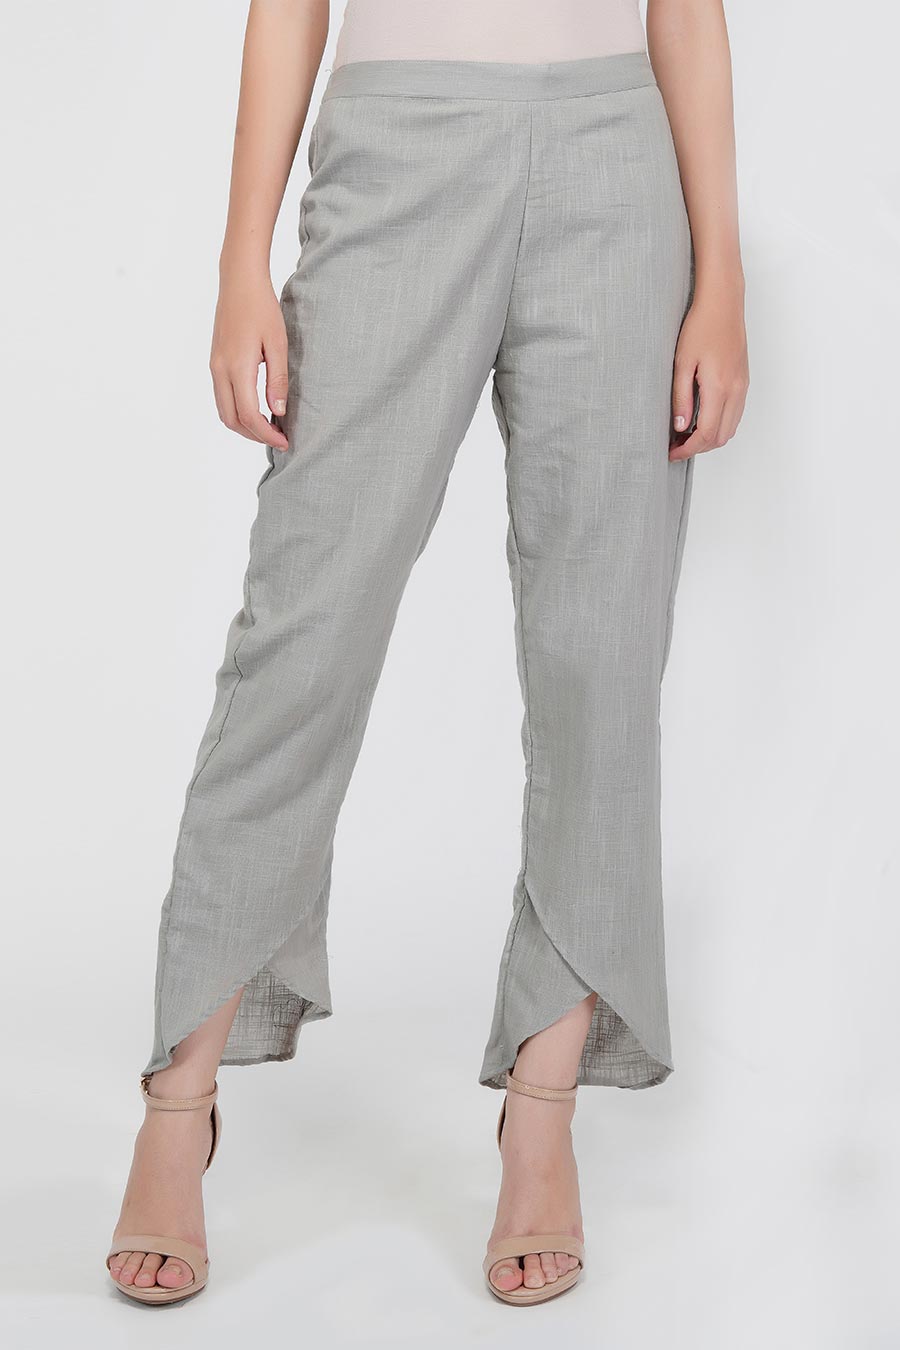 Grey Tulip Hemline Cotton Pants